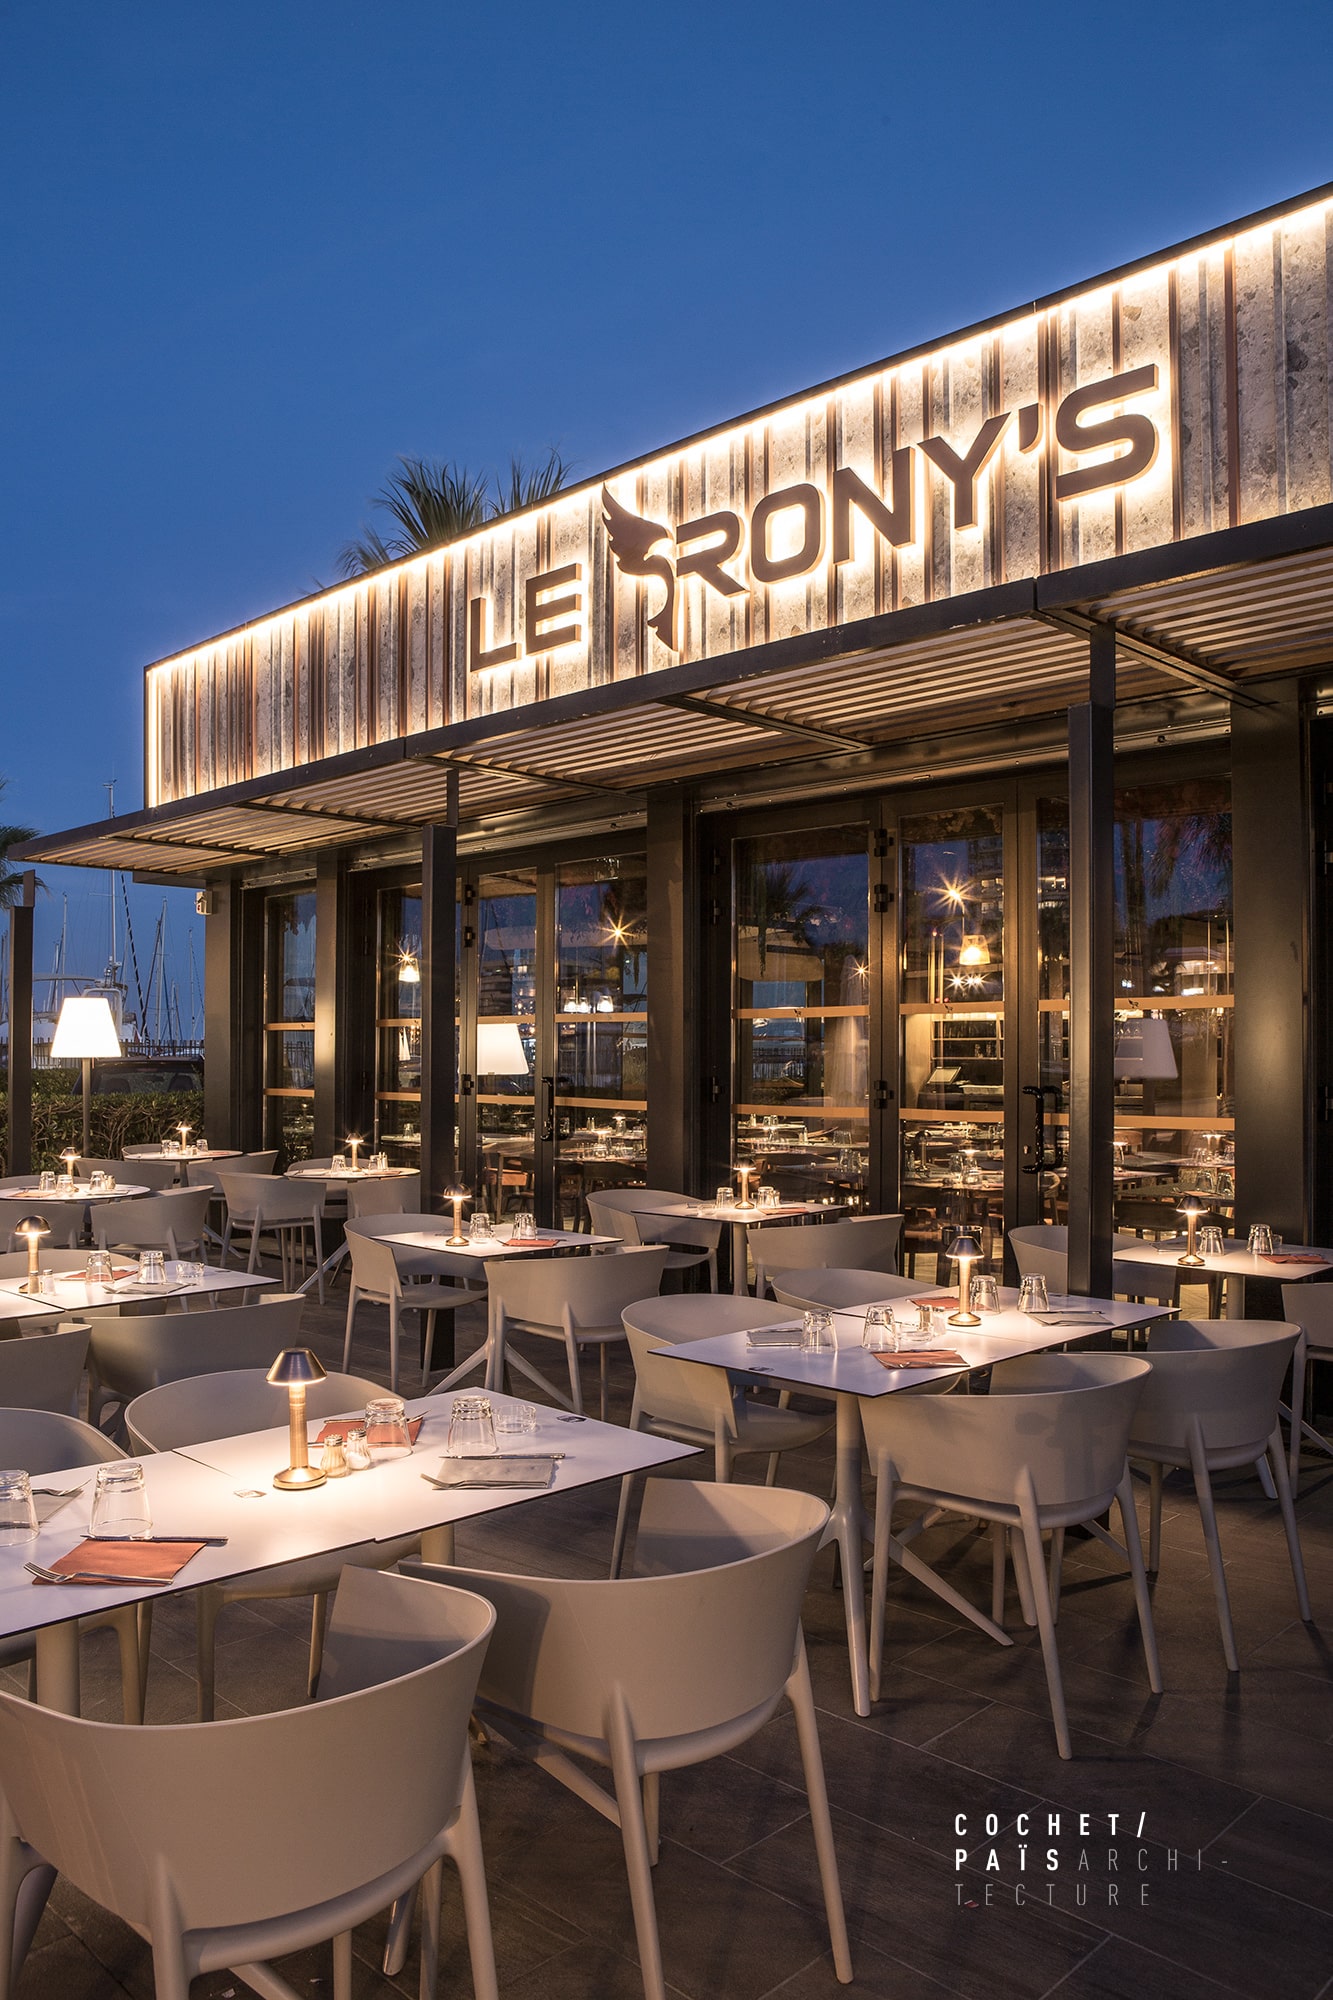 Restaurant Le Rony's - 26